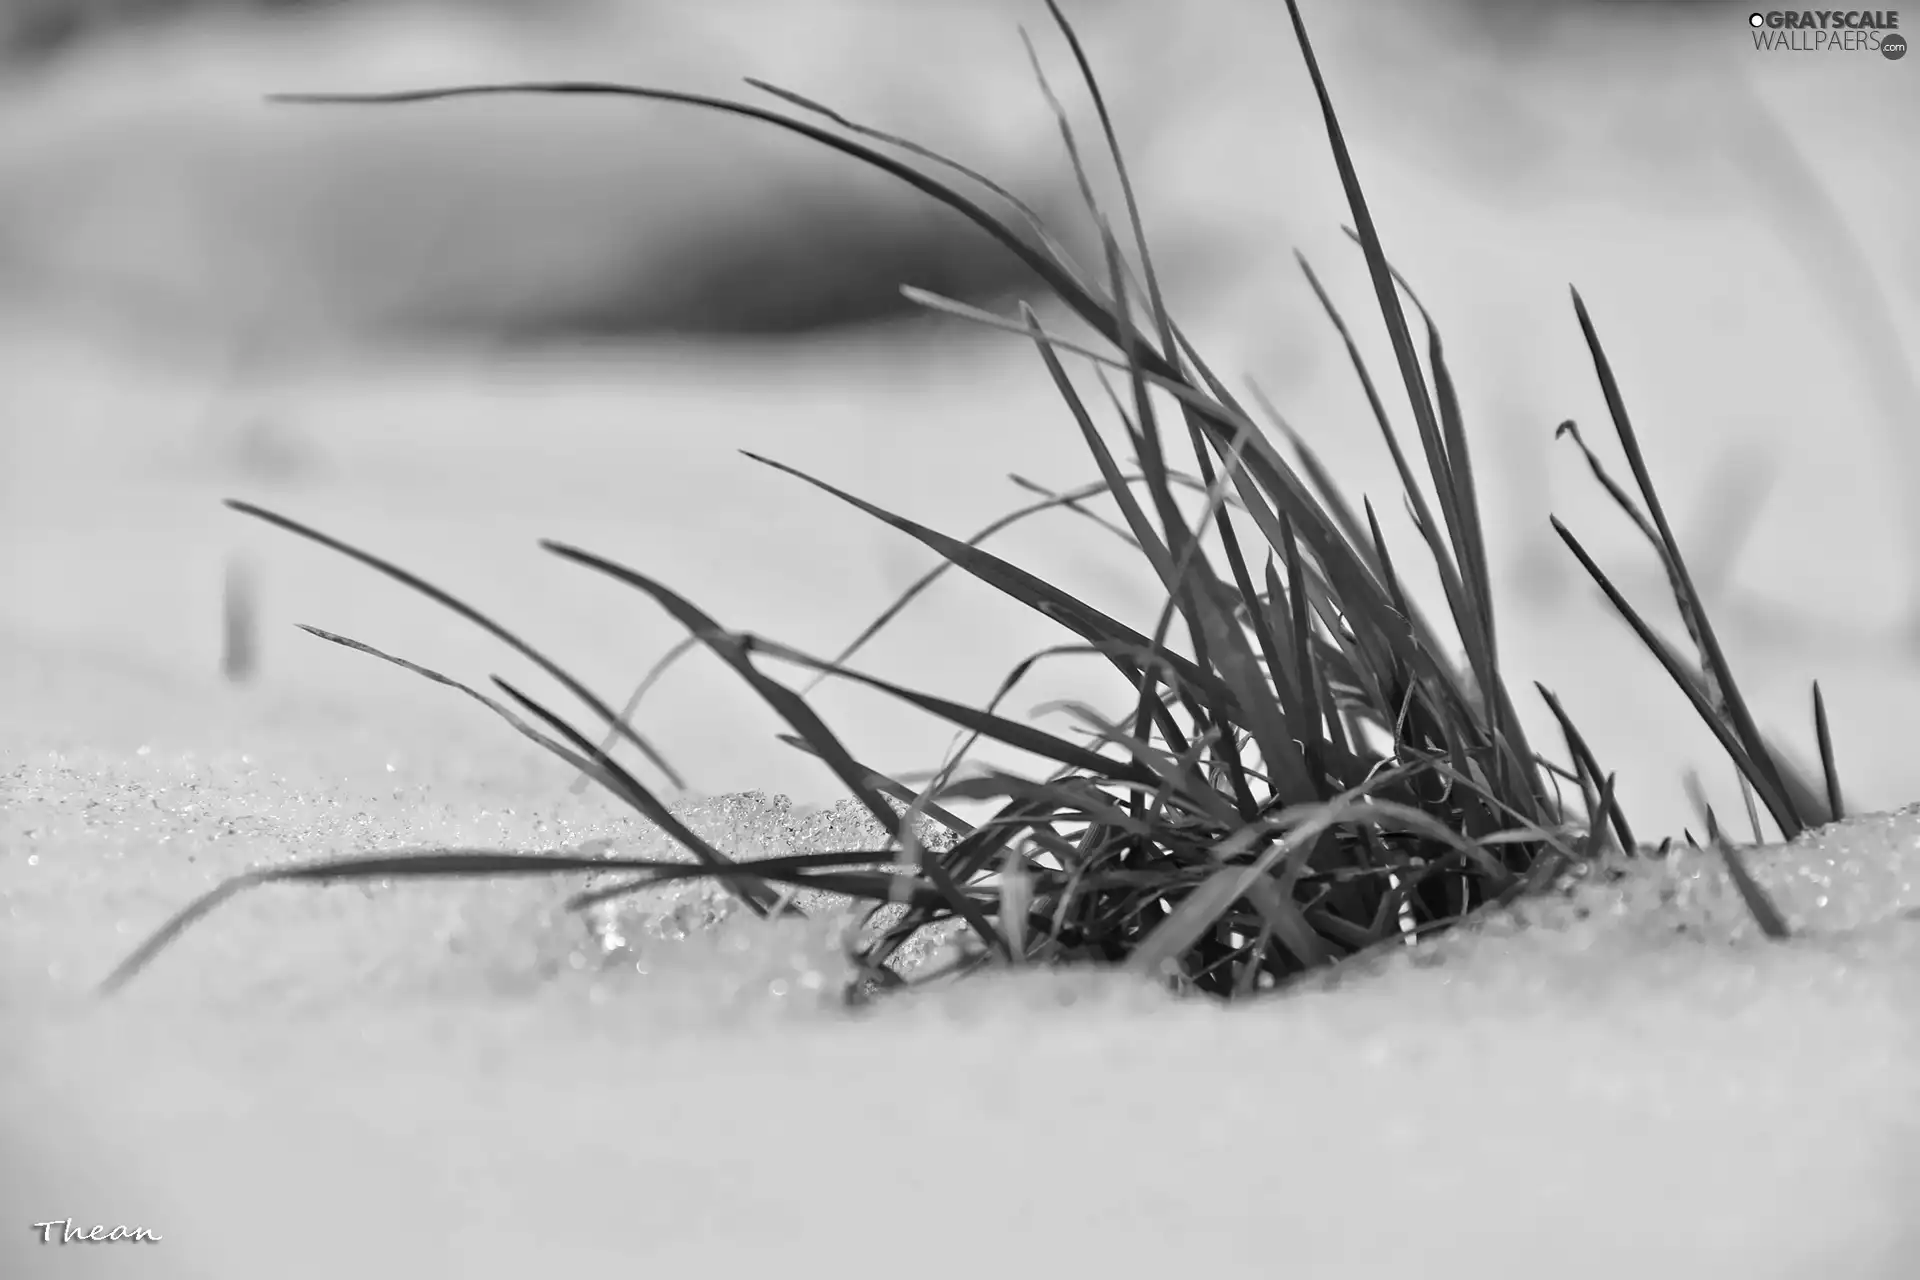 winter, snow, grass